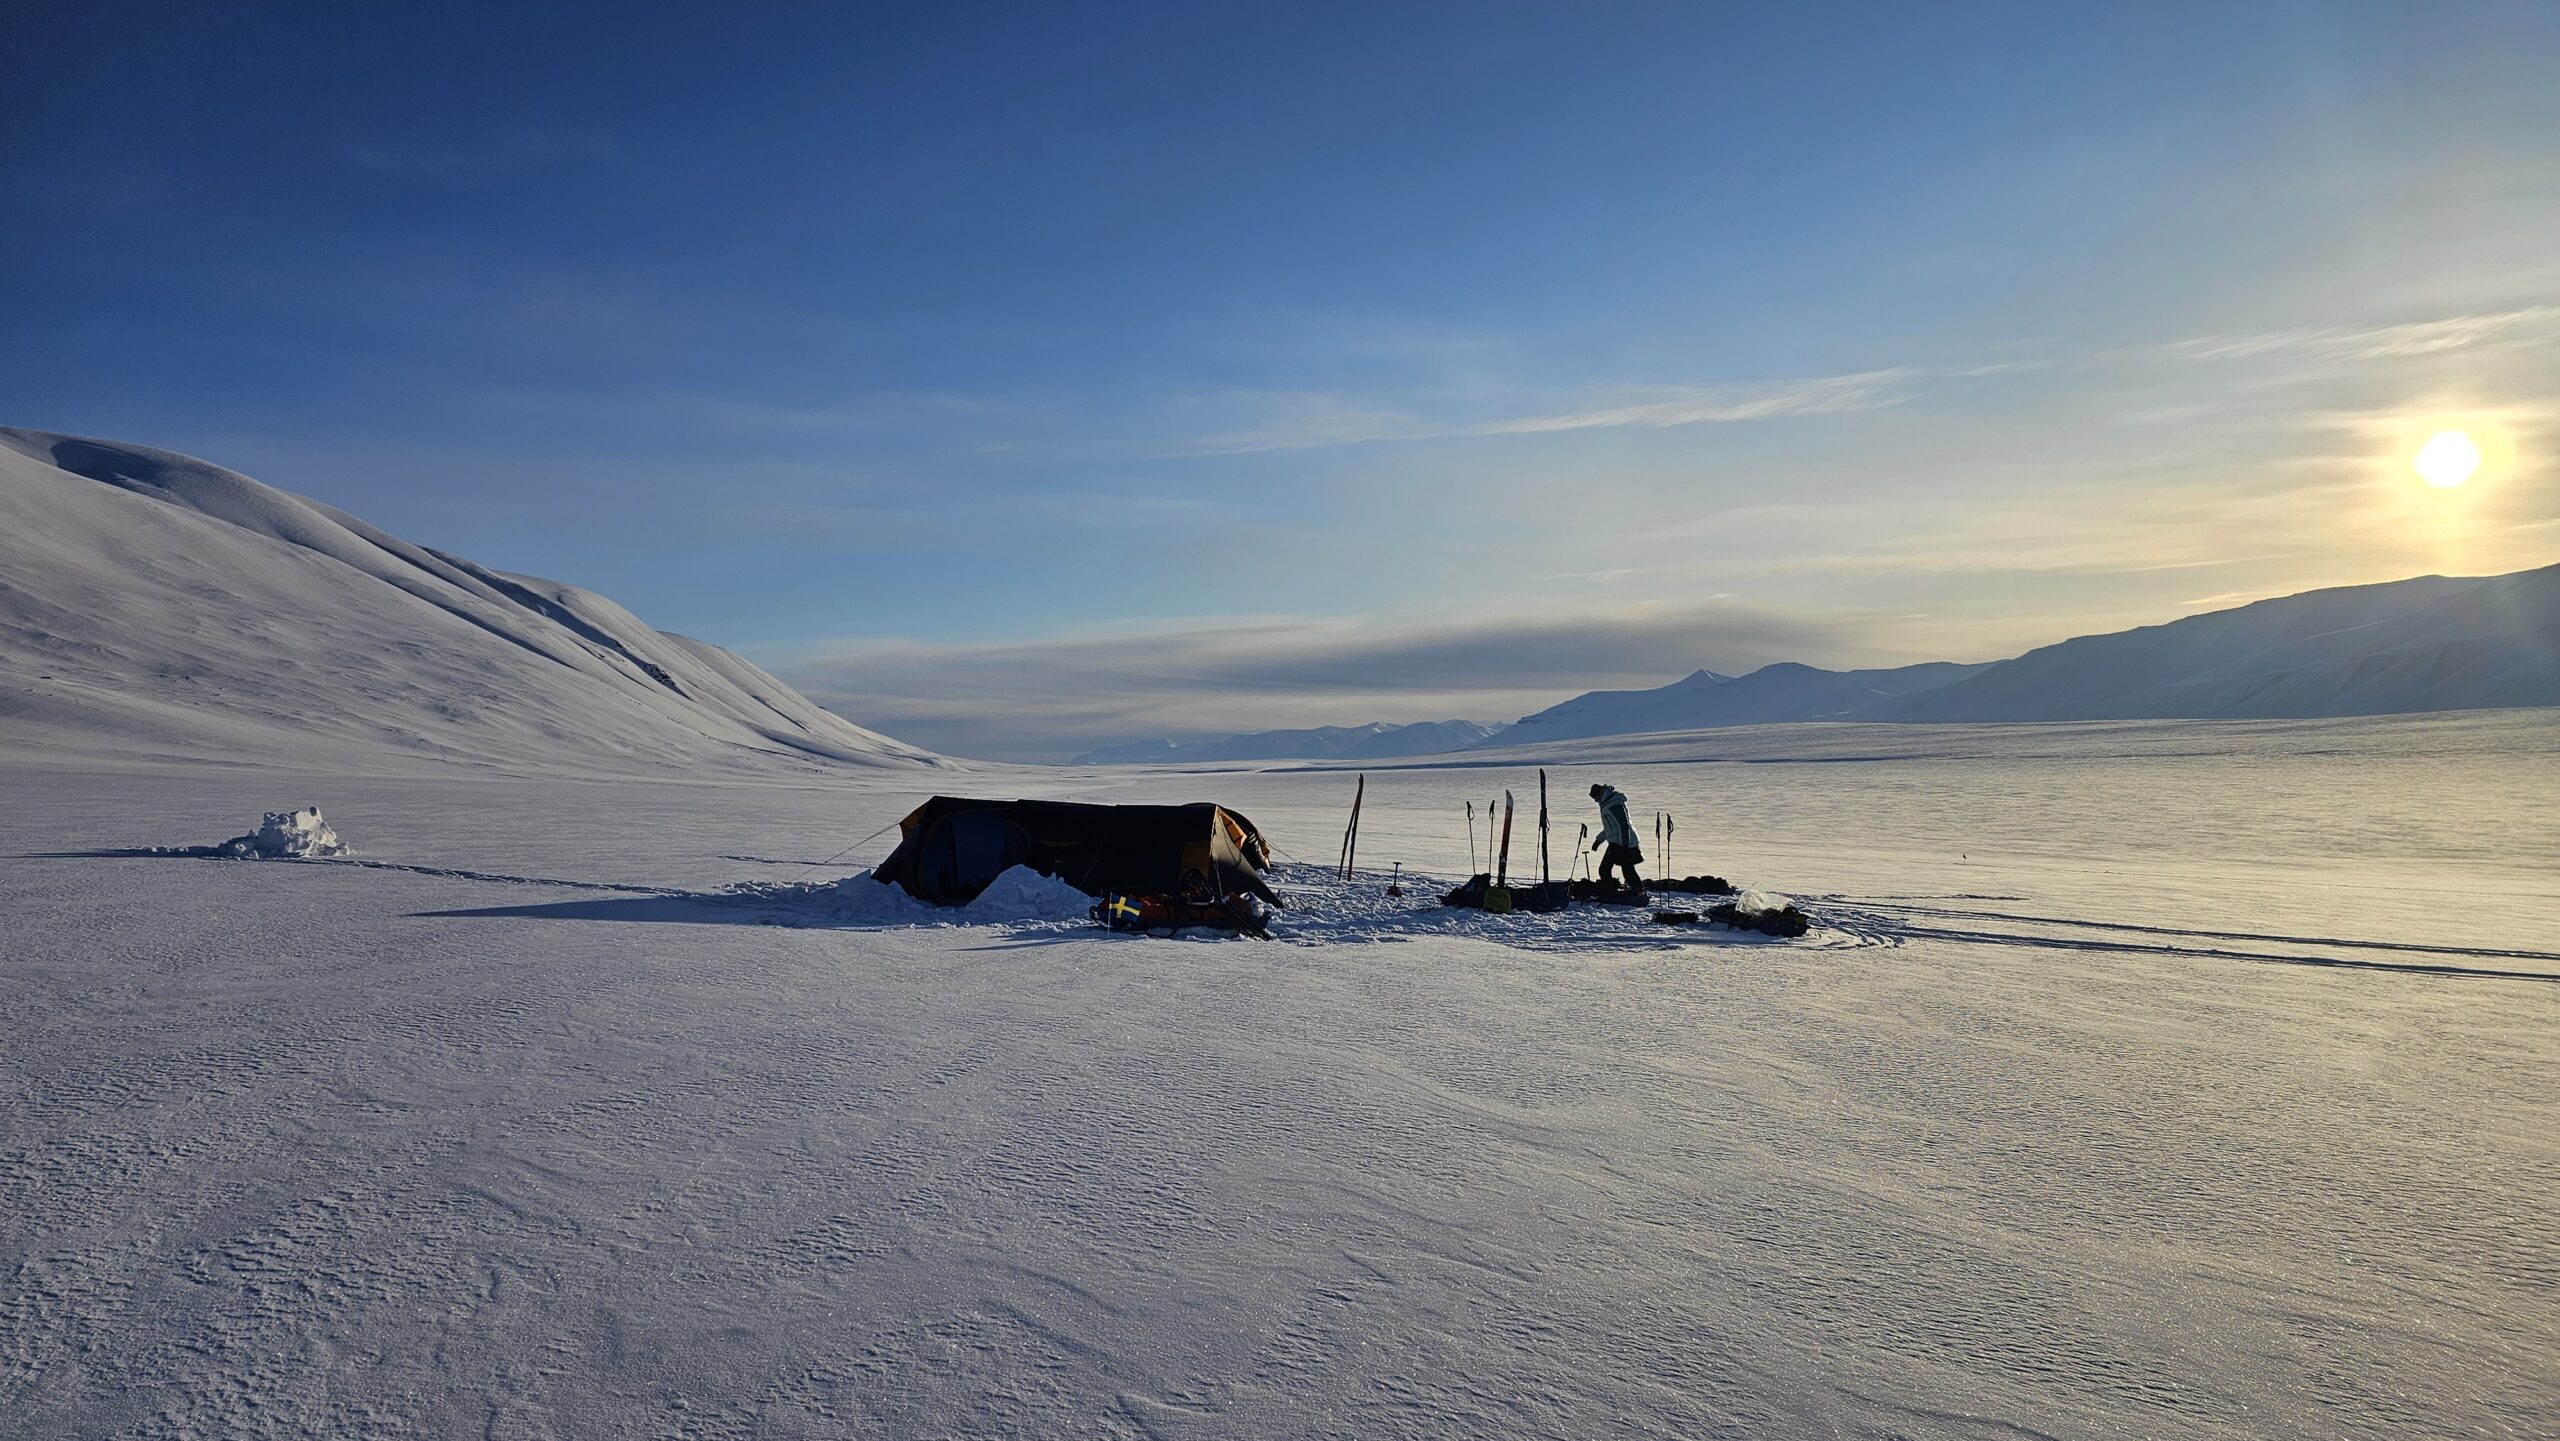 Tent in snowy arctic scene